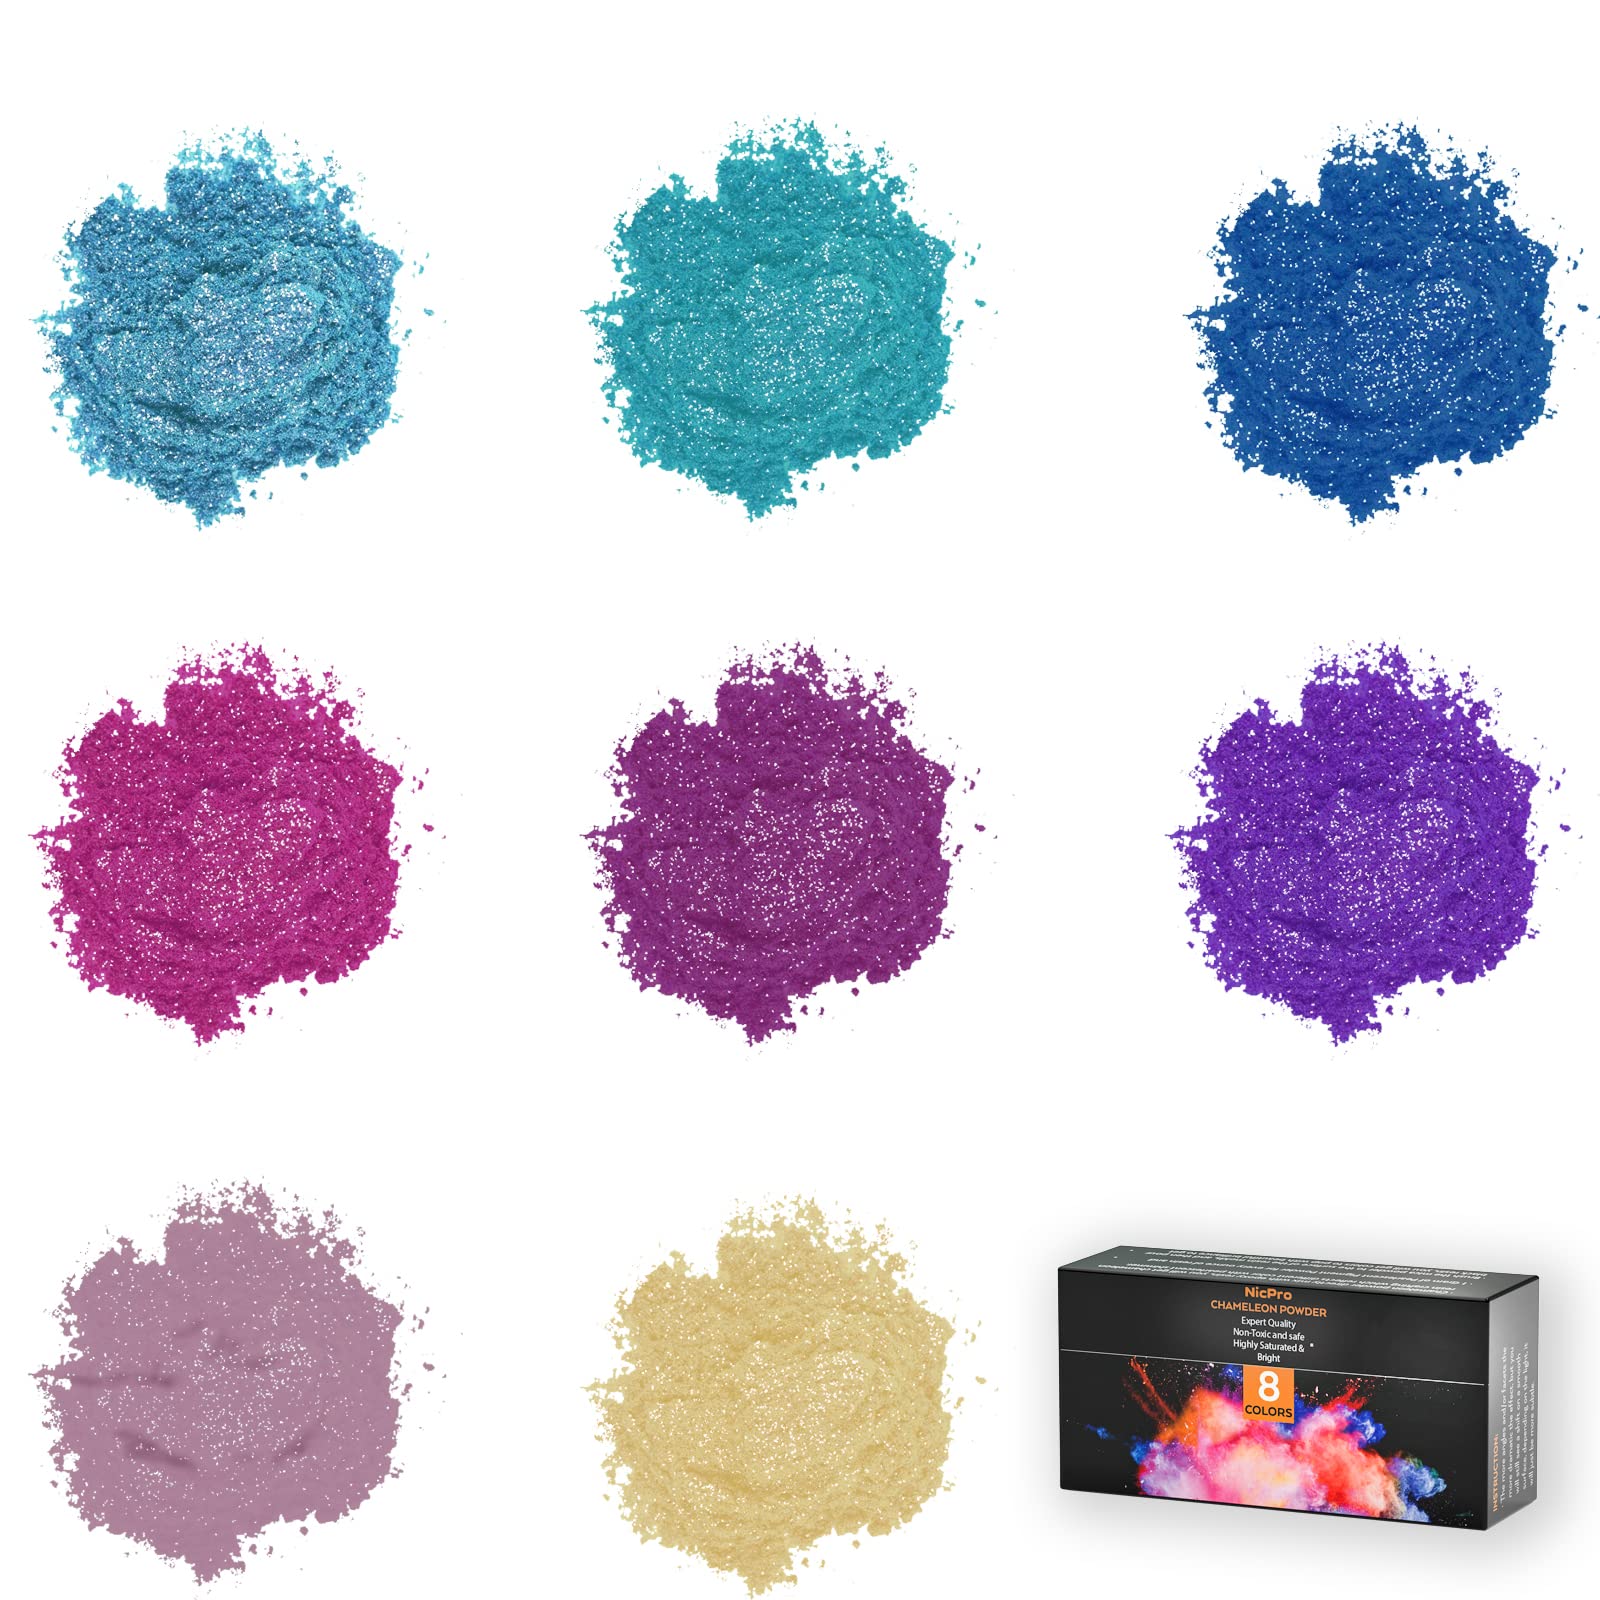 Nicpro 8 Color Chameleon Powder Pigment Set, Updated Mica Powder for E